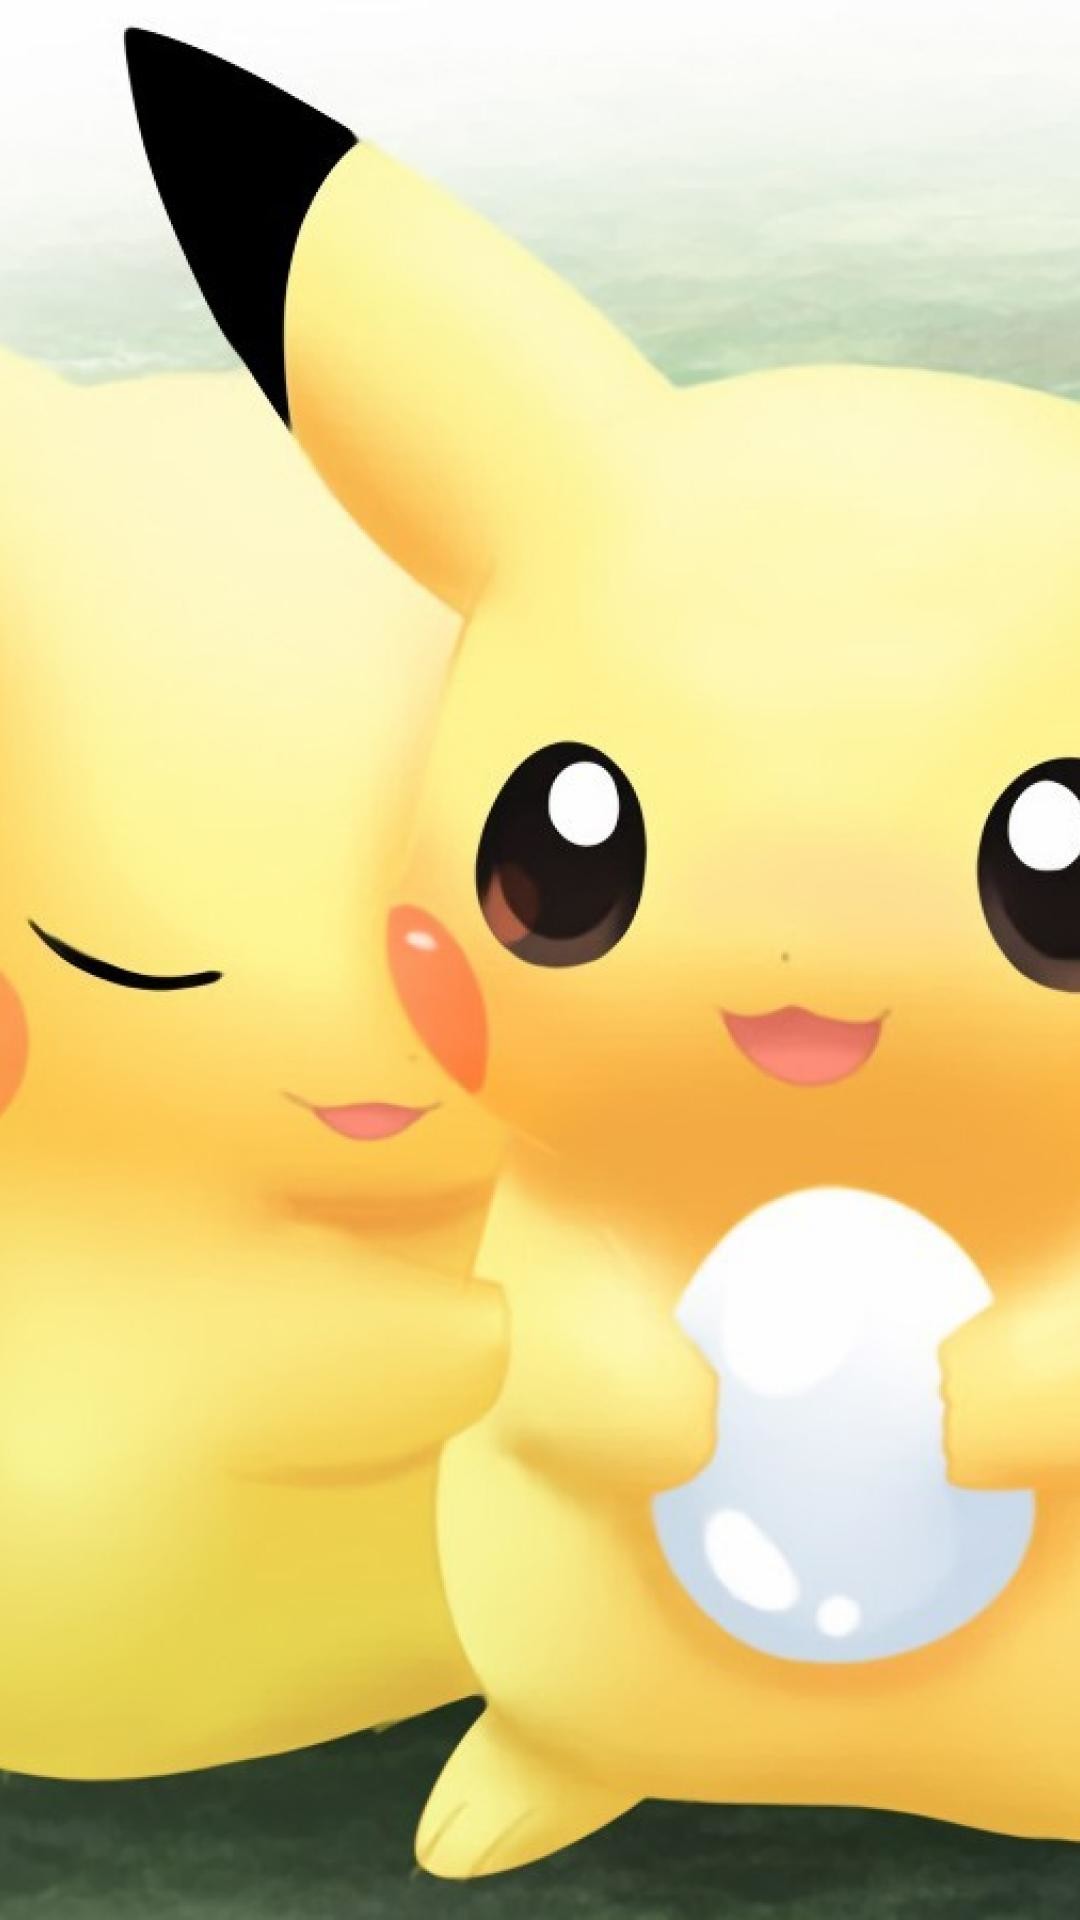 Pokemon Pikachu love girly love iphone 6 plus wallpaper